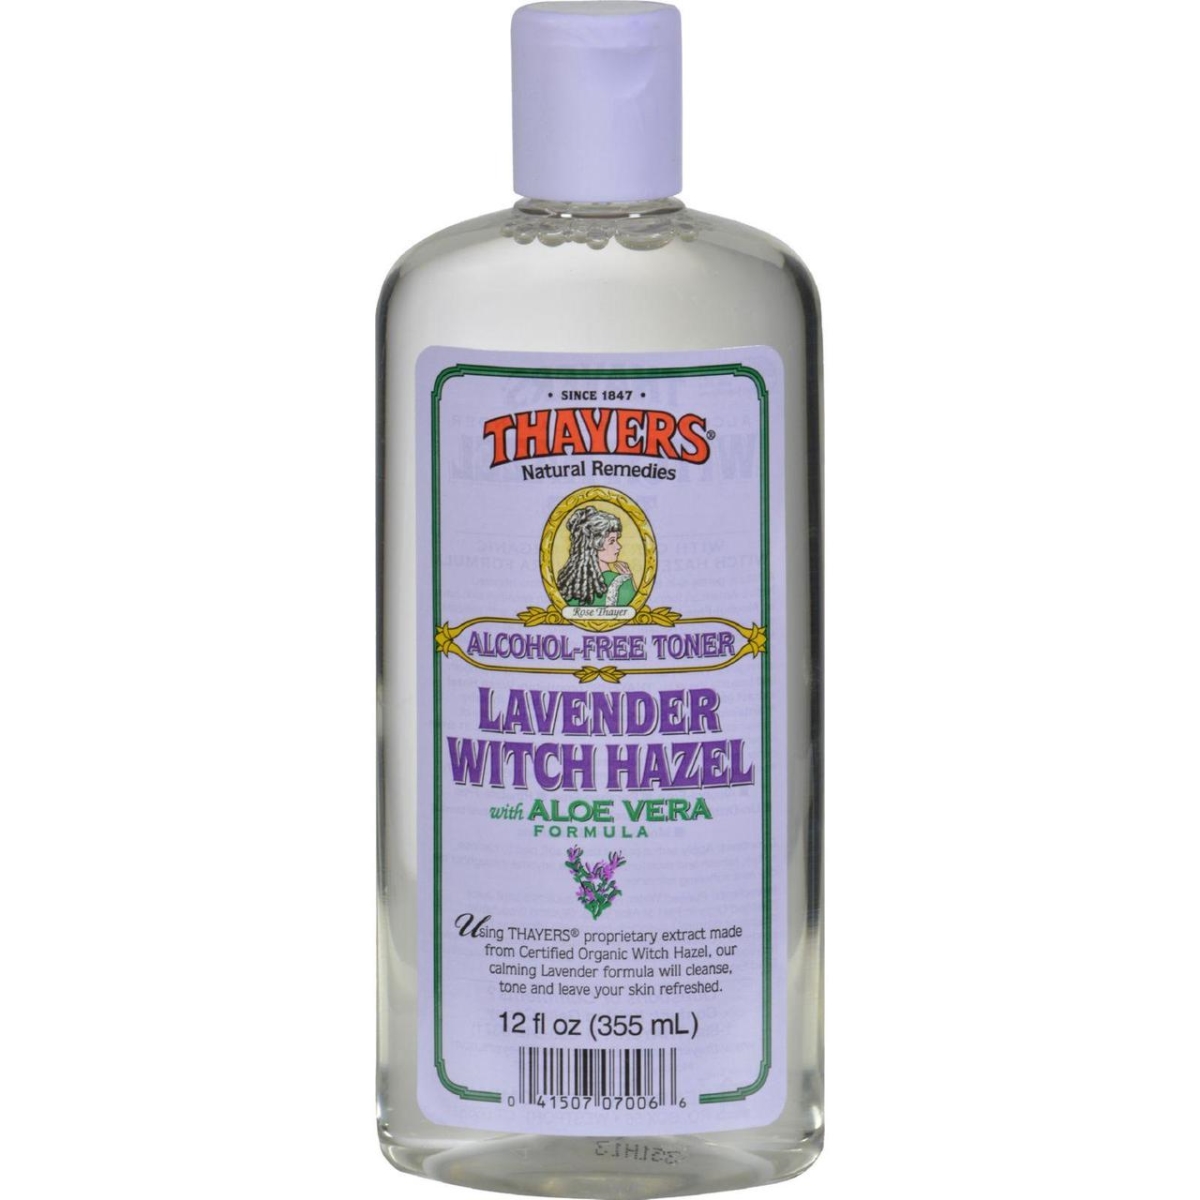 Hg0557496 12 Fl Oz Witch Hazel With Aloe Vera Lavender